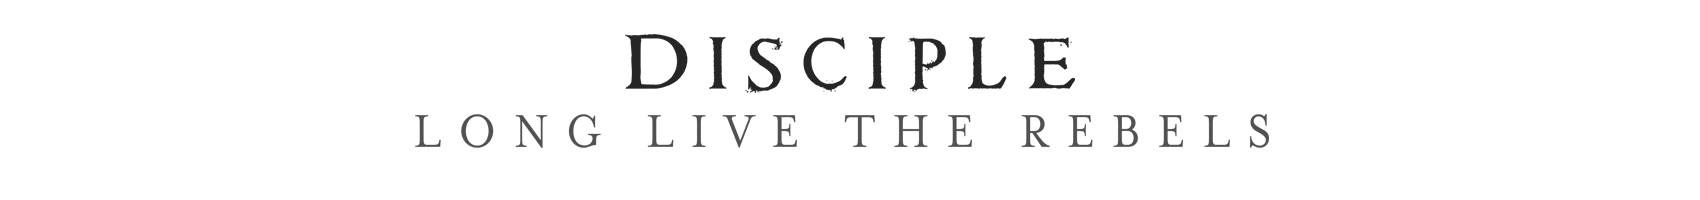 Disciple Band Logo - Disciple Message Board